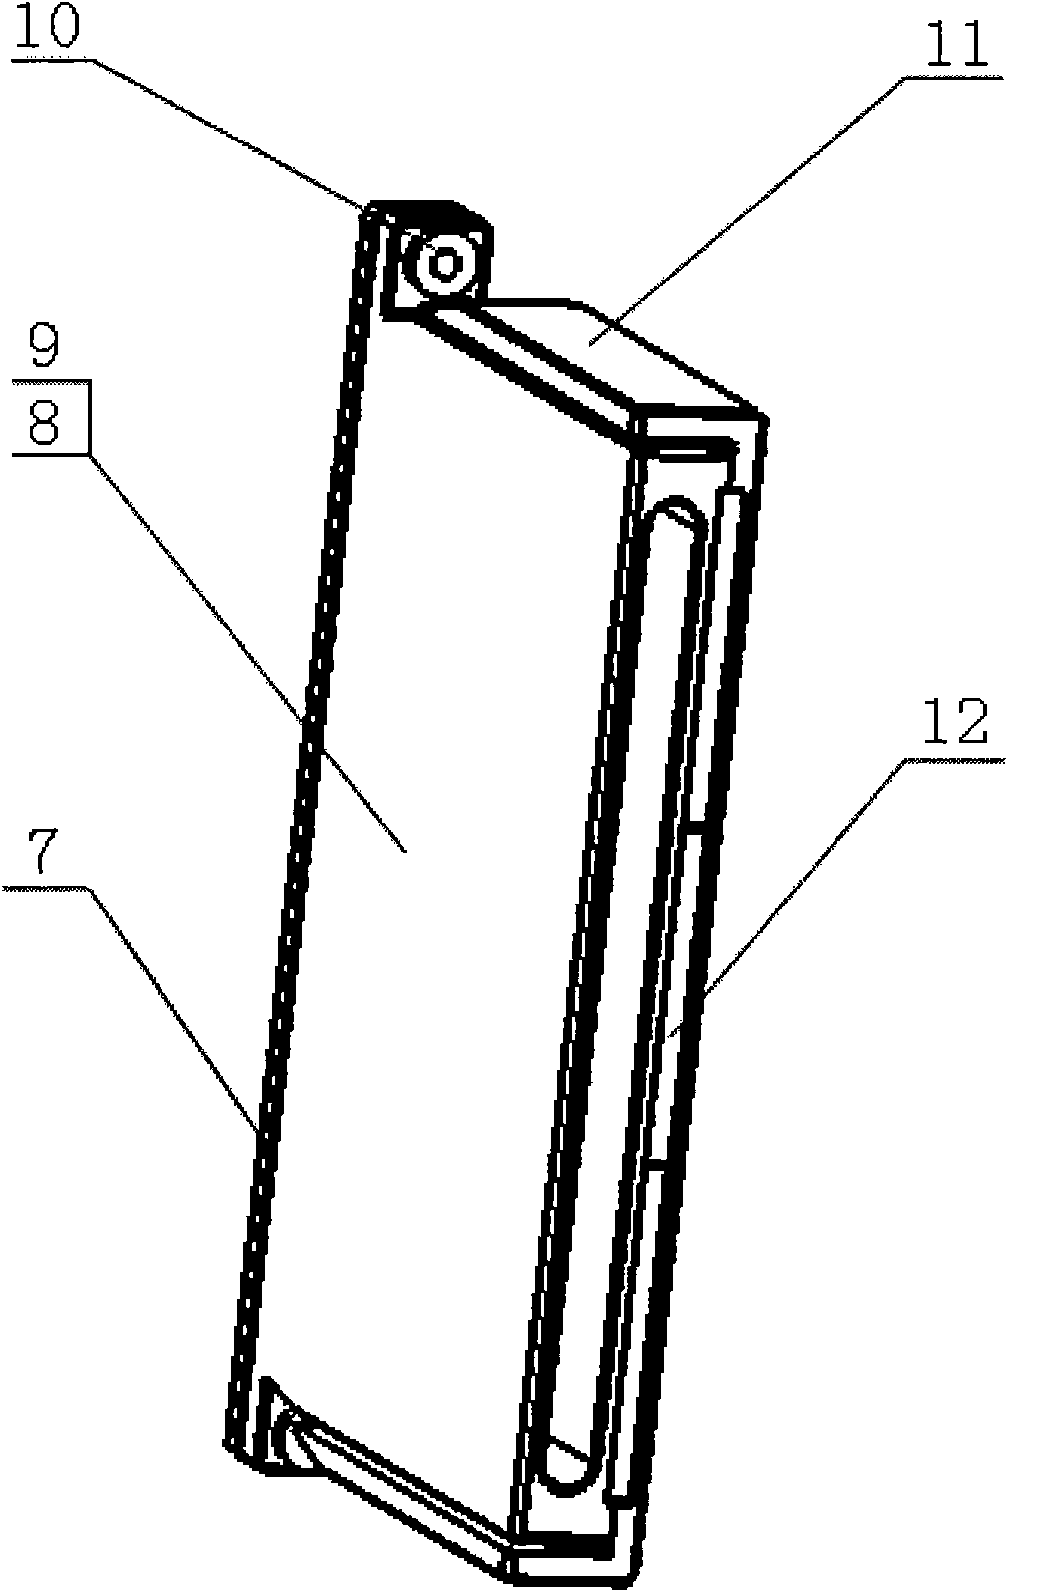 Faraday apparatus for measuring beam